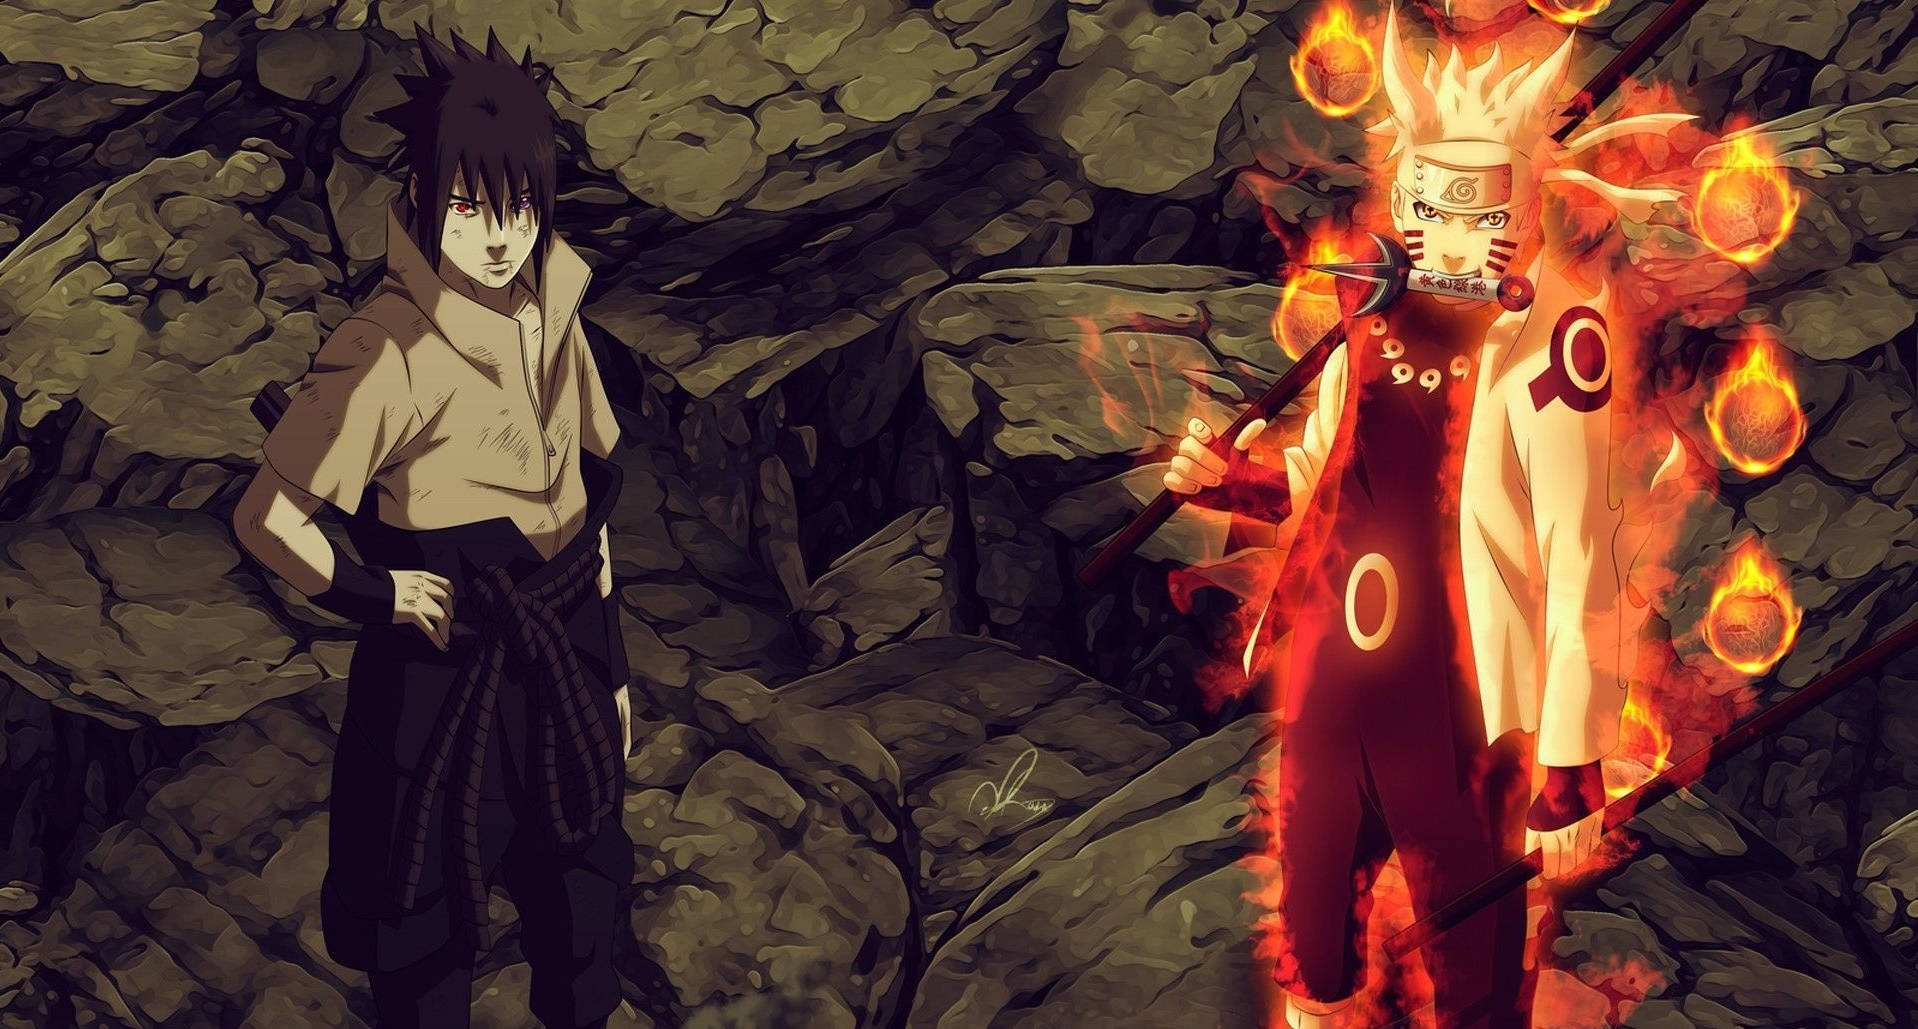 Anime Naruto Fighting Together With Sasuke Uchiha